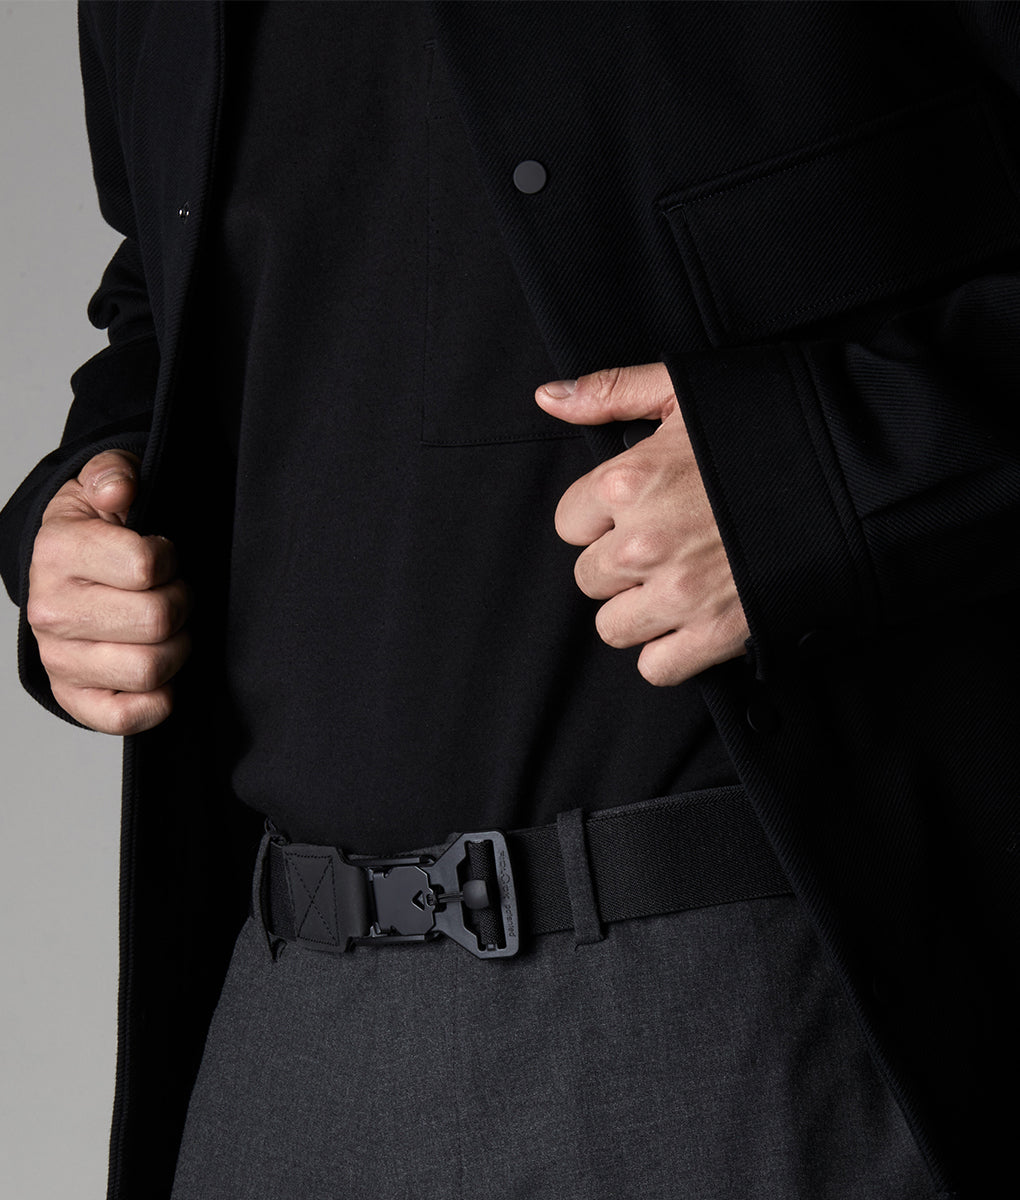 Men's Cargo Pants with Belt Black Bolf 2096 BLACK